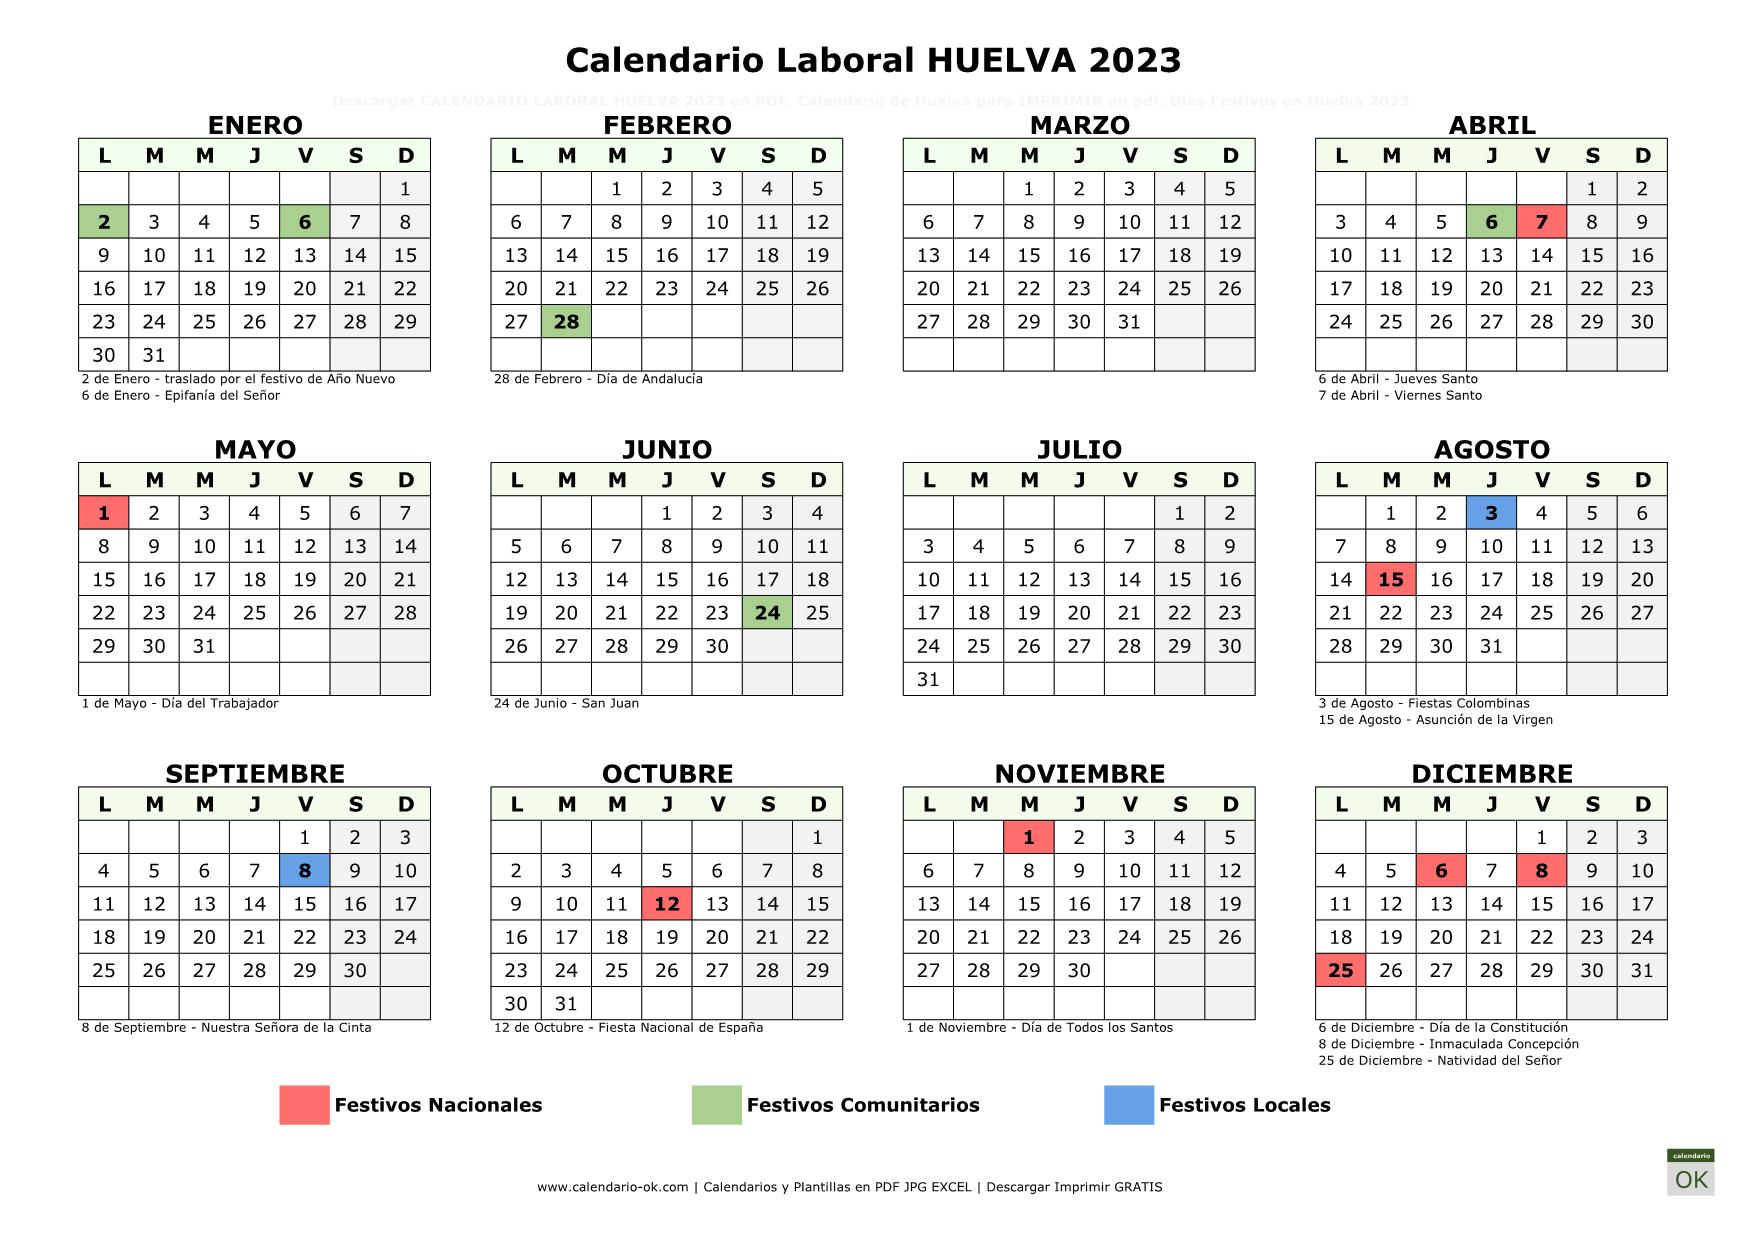 Calendario Laboral Huelva 2023 horizontal